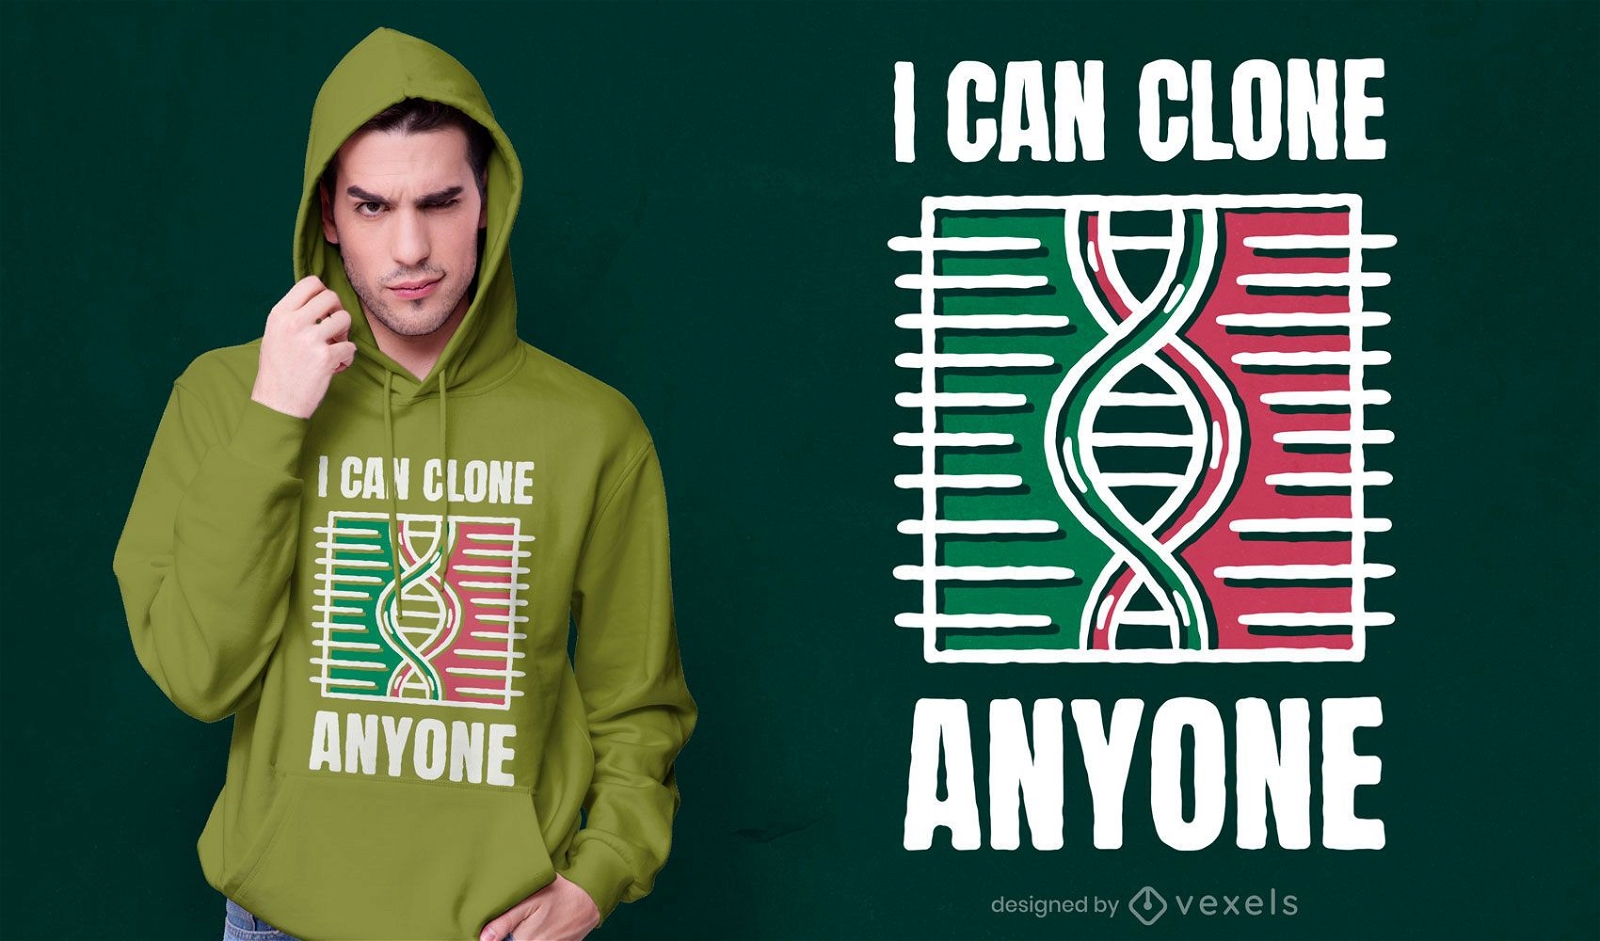 Cloning quote t-shirt design